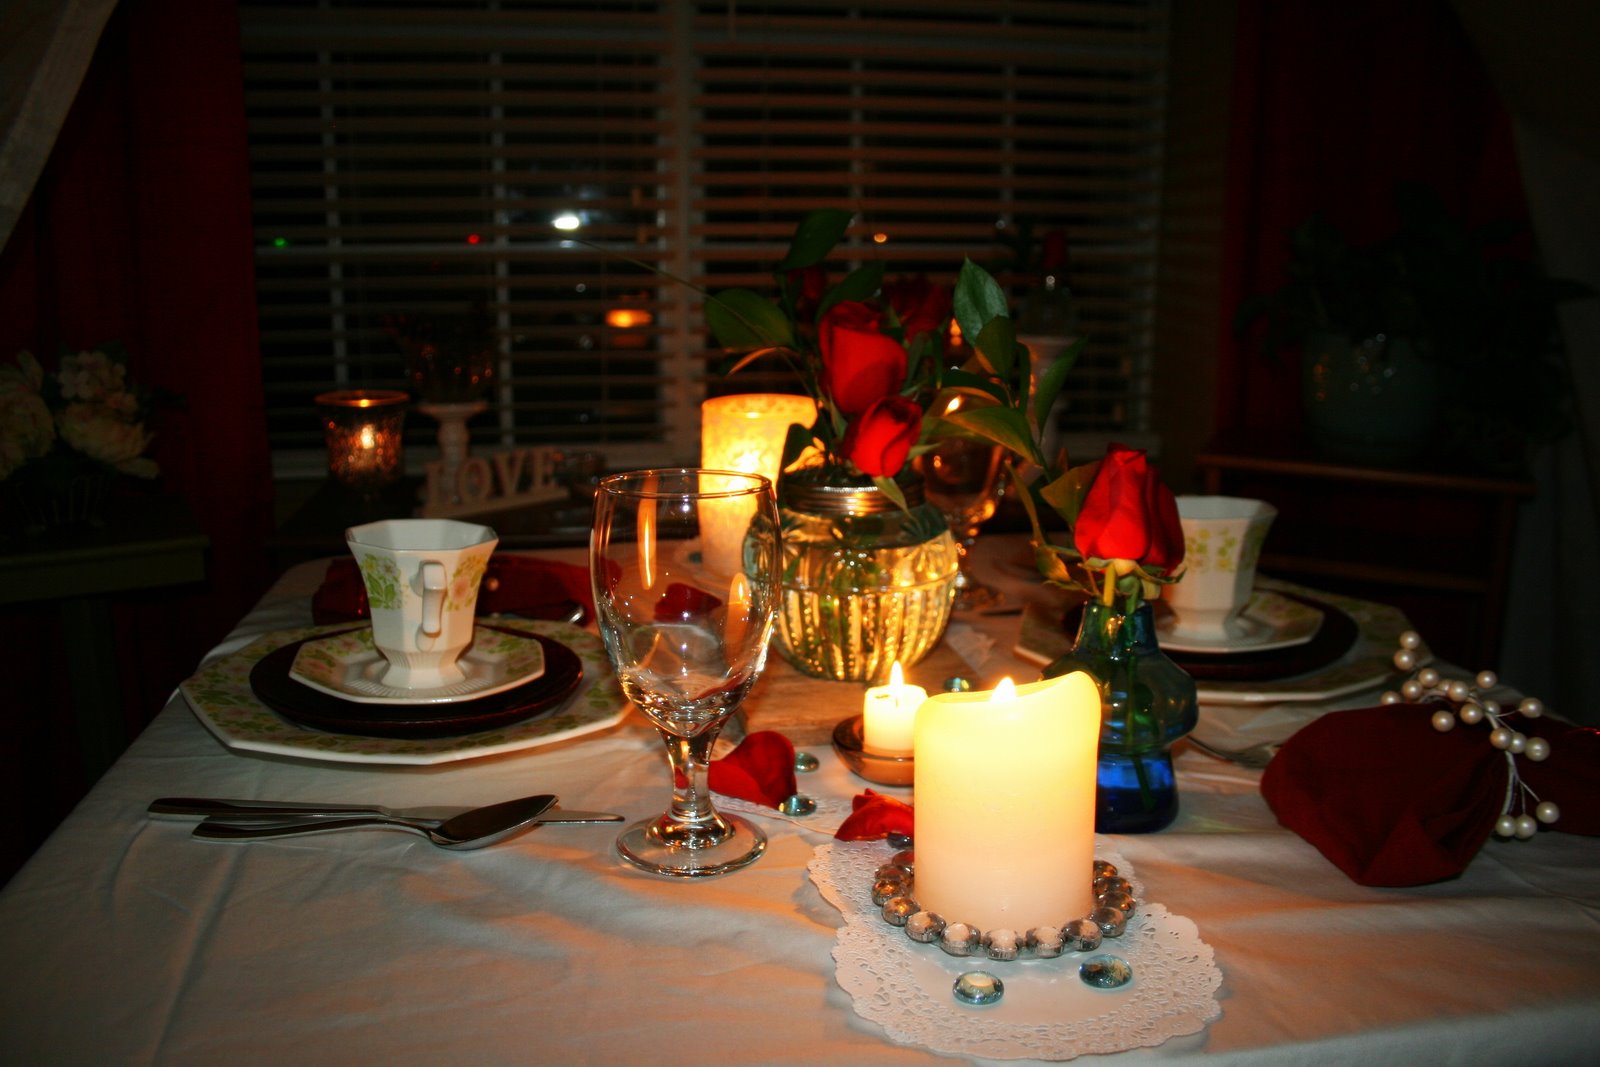 Defrump Me Romantic Dinner Date At Home.